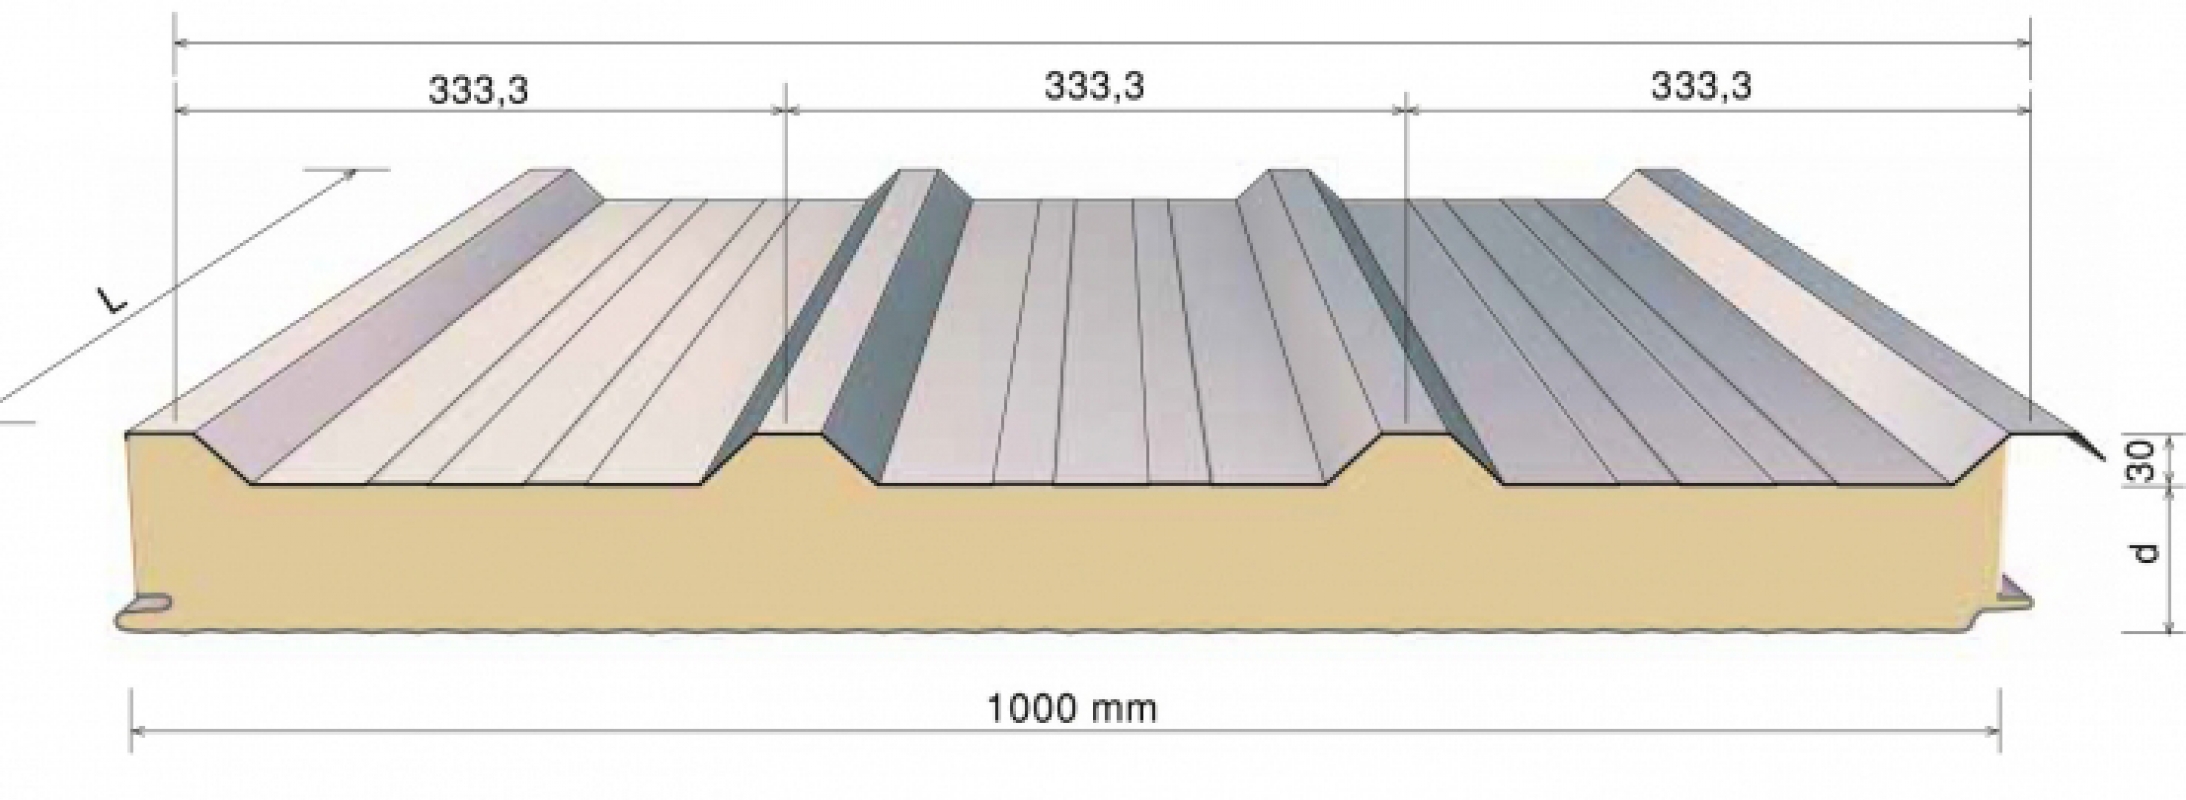 Roof Sandwich Panels